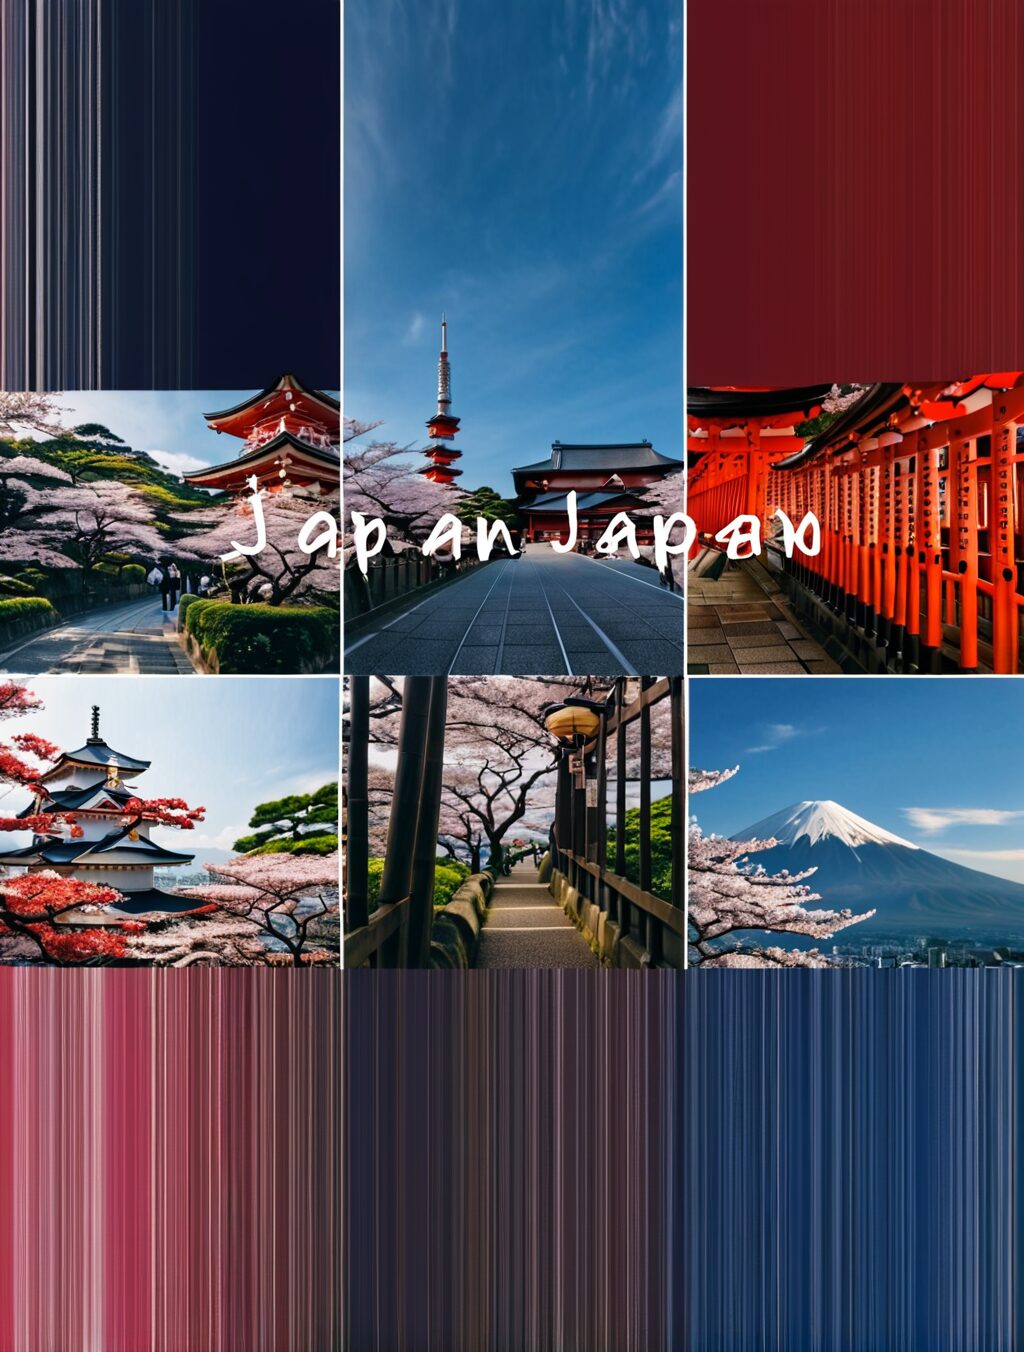 japan travel itinerary 1 week